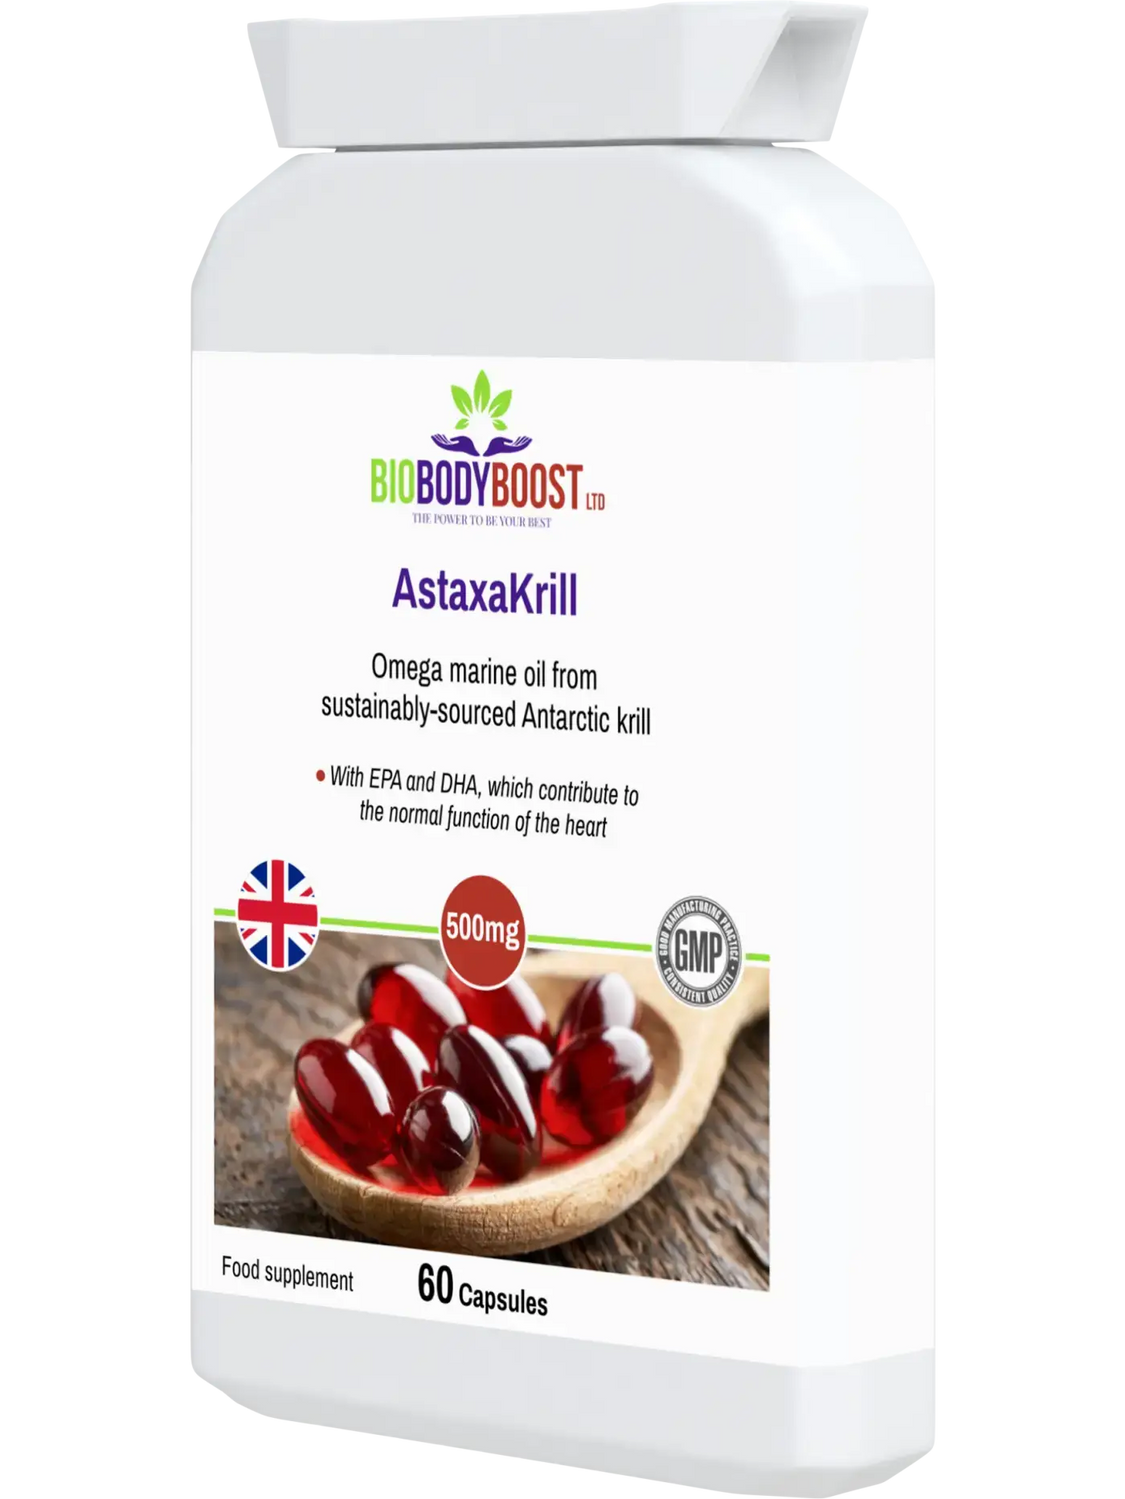 AstaxaKrill Antarctic Krill Oil Capsules - Food Supplement